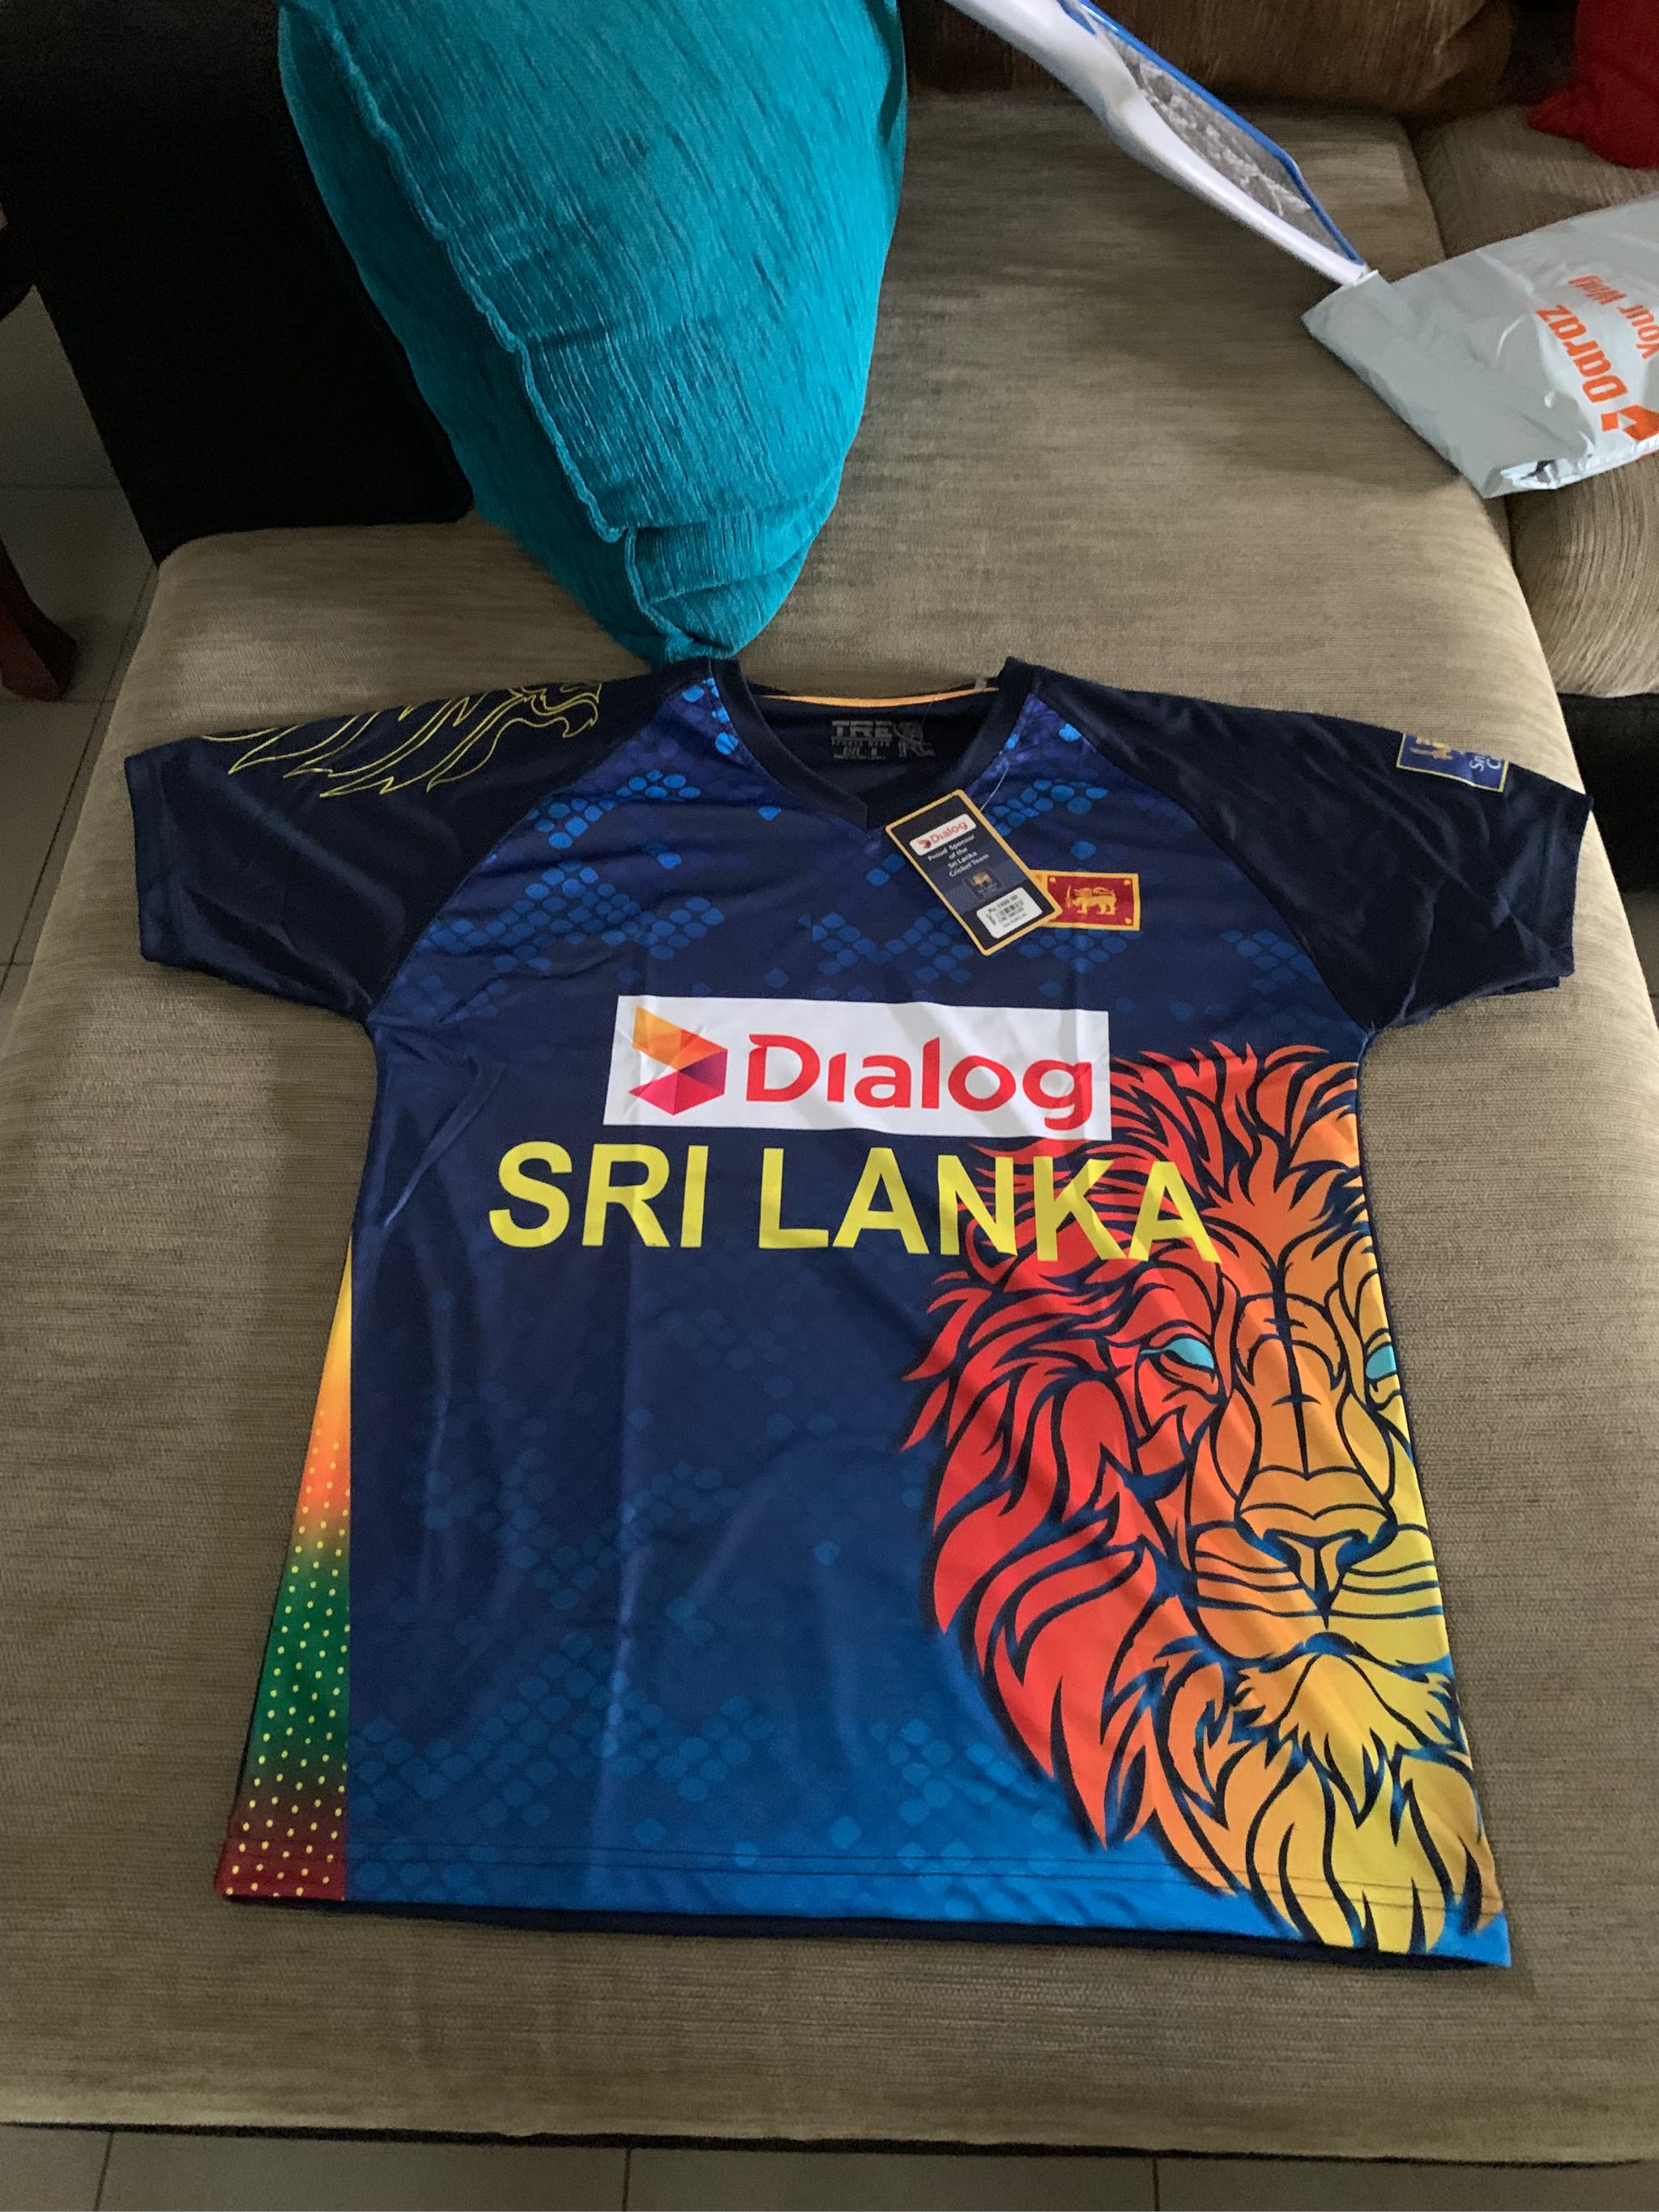 Sri Lanka Cricket T20 Jersey (daraz)